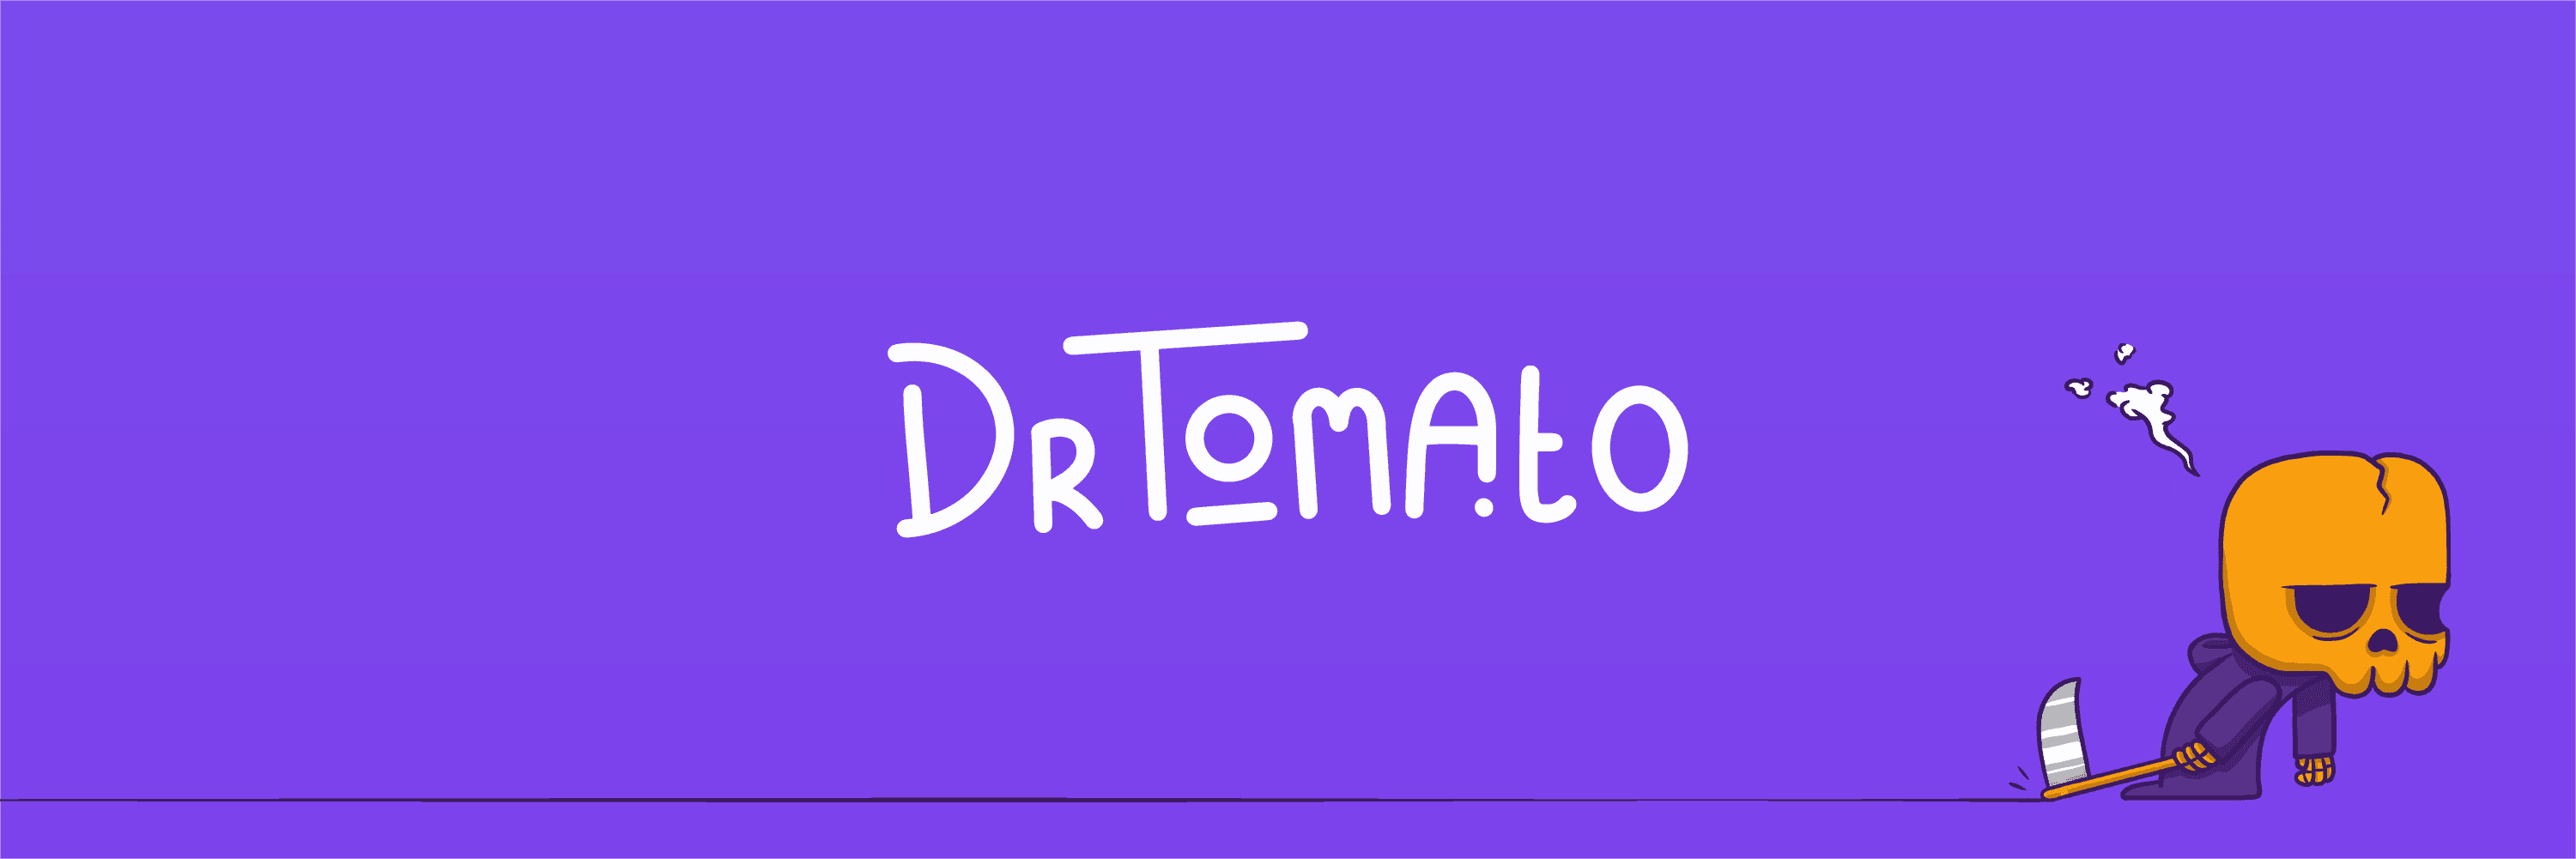 DrTomato_Vault バナー